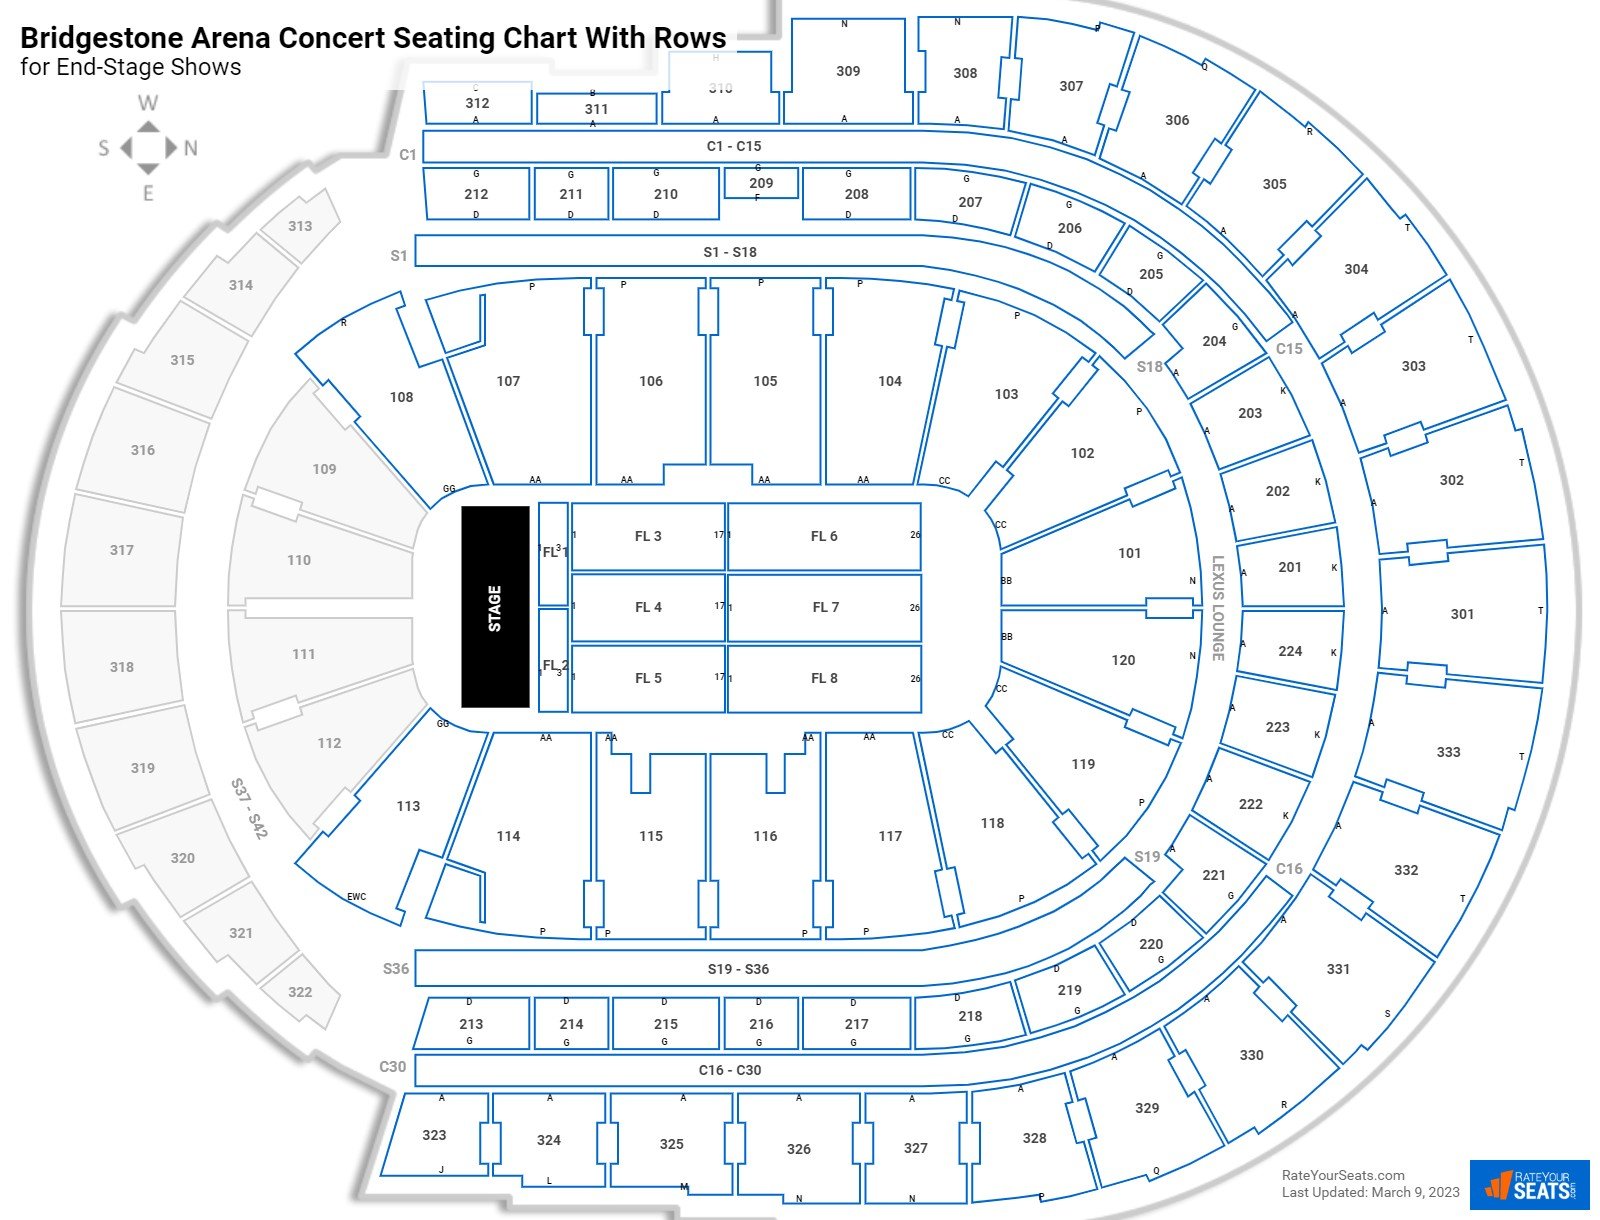 Bridgestone Arena Seating Charts For Concerts Rateyourseats Com